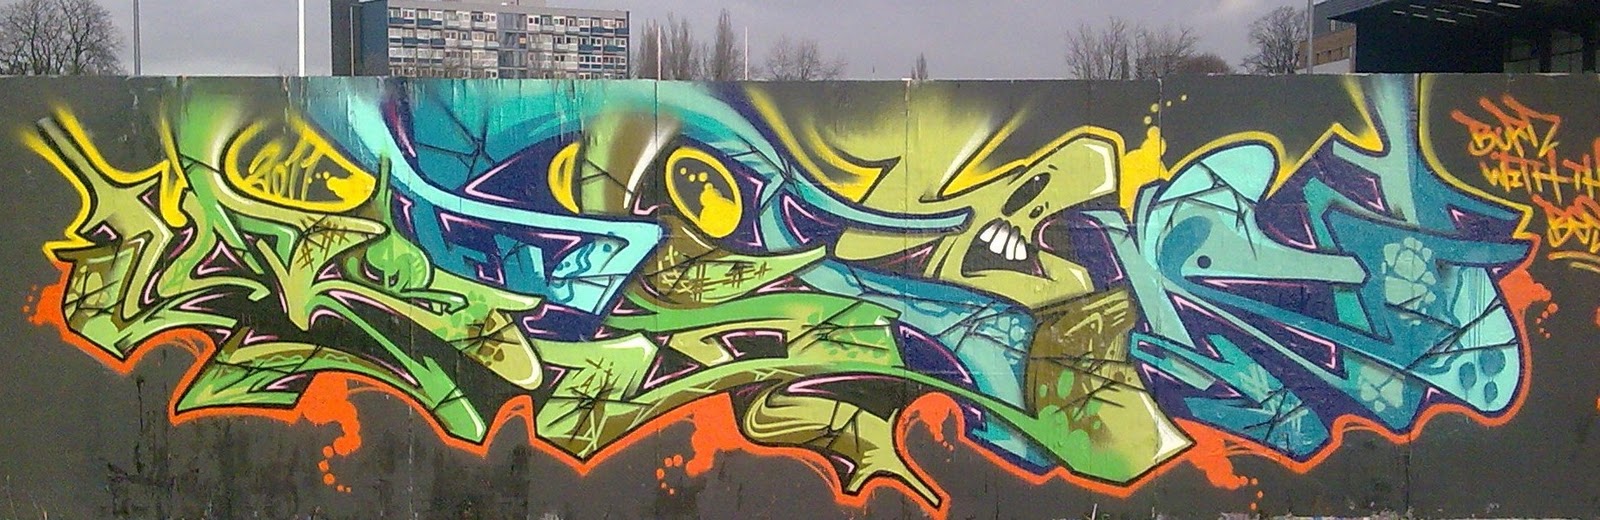 Pin By Niko Vwagner On 3rdeye Inspiration Graffiti Images